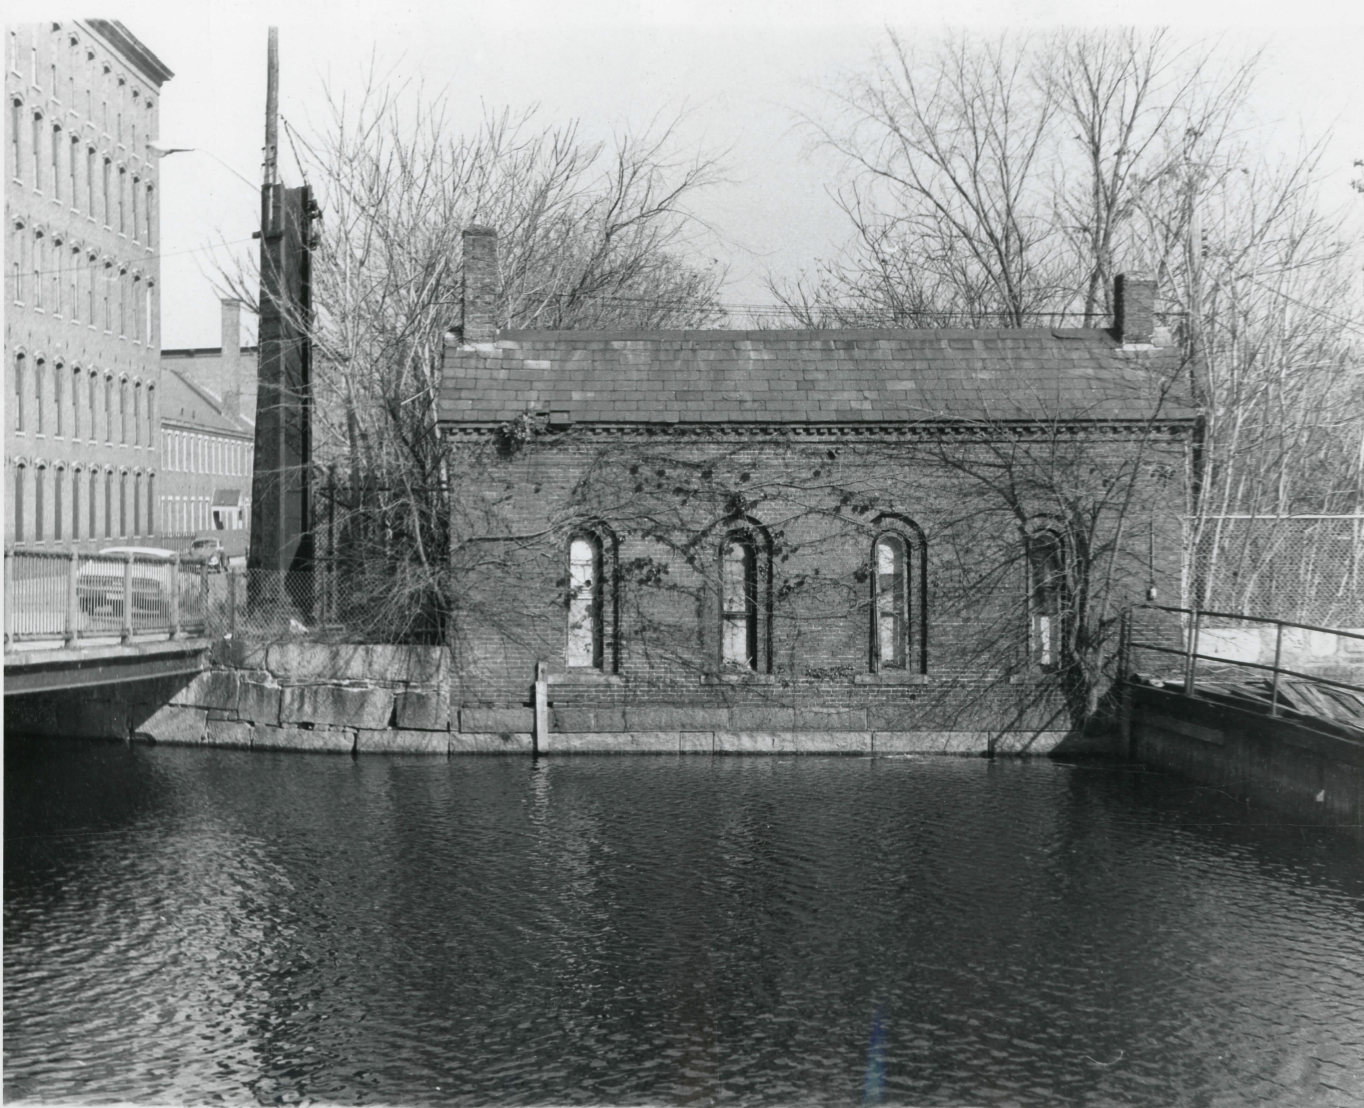 Tremont Gatehouse and Suffolk Yard